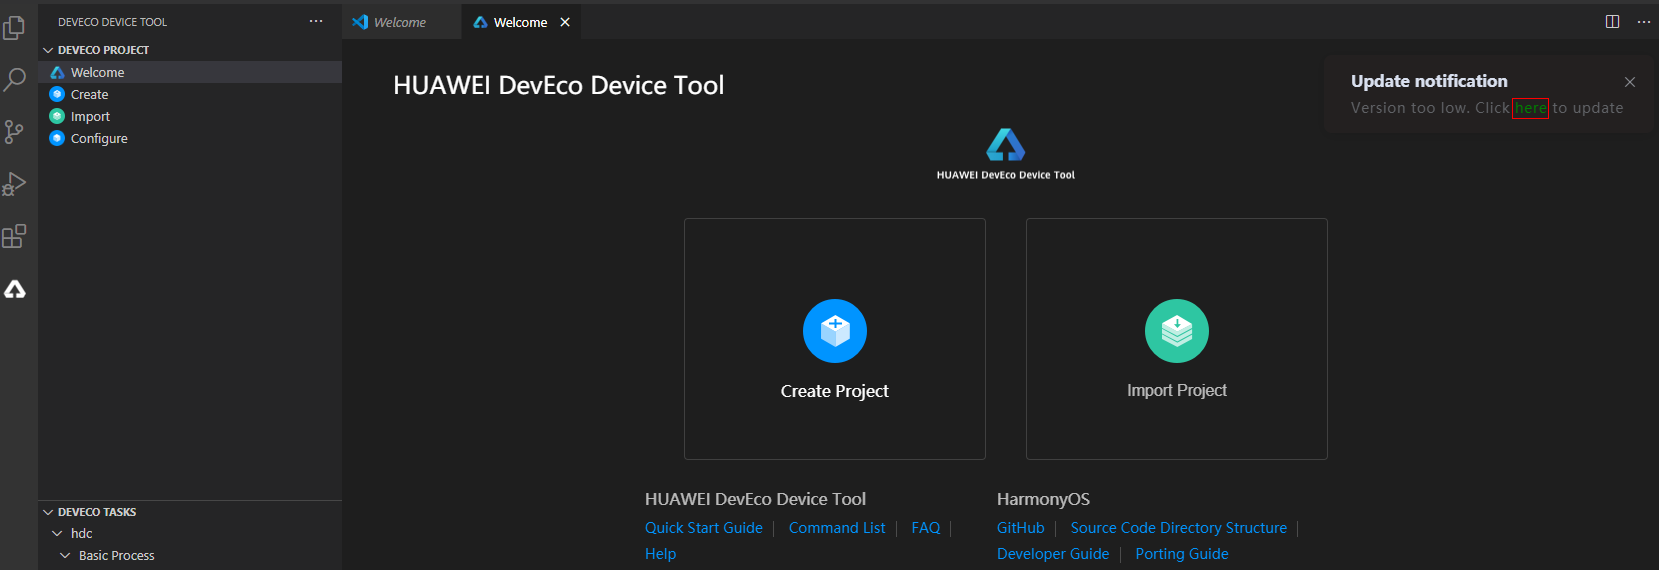 HUAWEI DevEco Device Tool 2.0 Beta1上线了，快来升级体验吧！-鸿蒙开发者社区